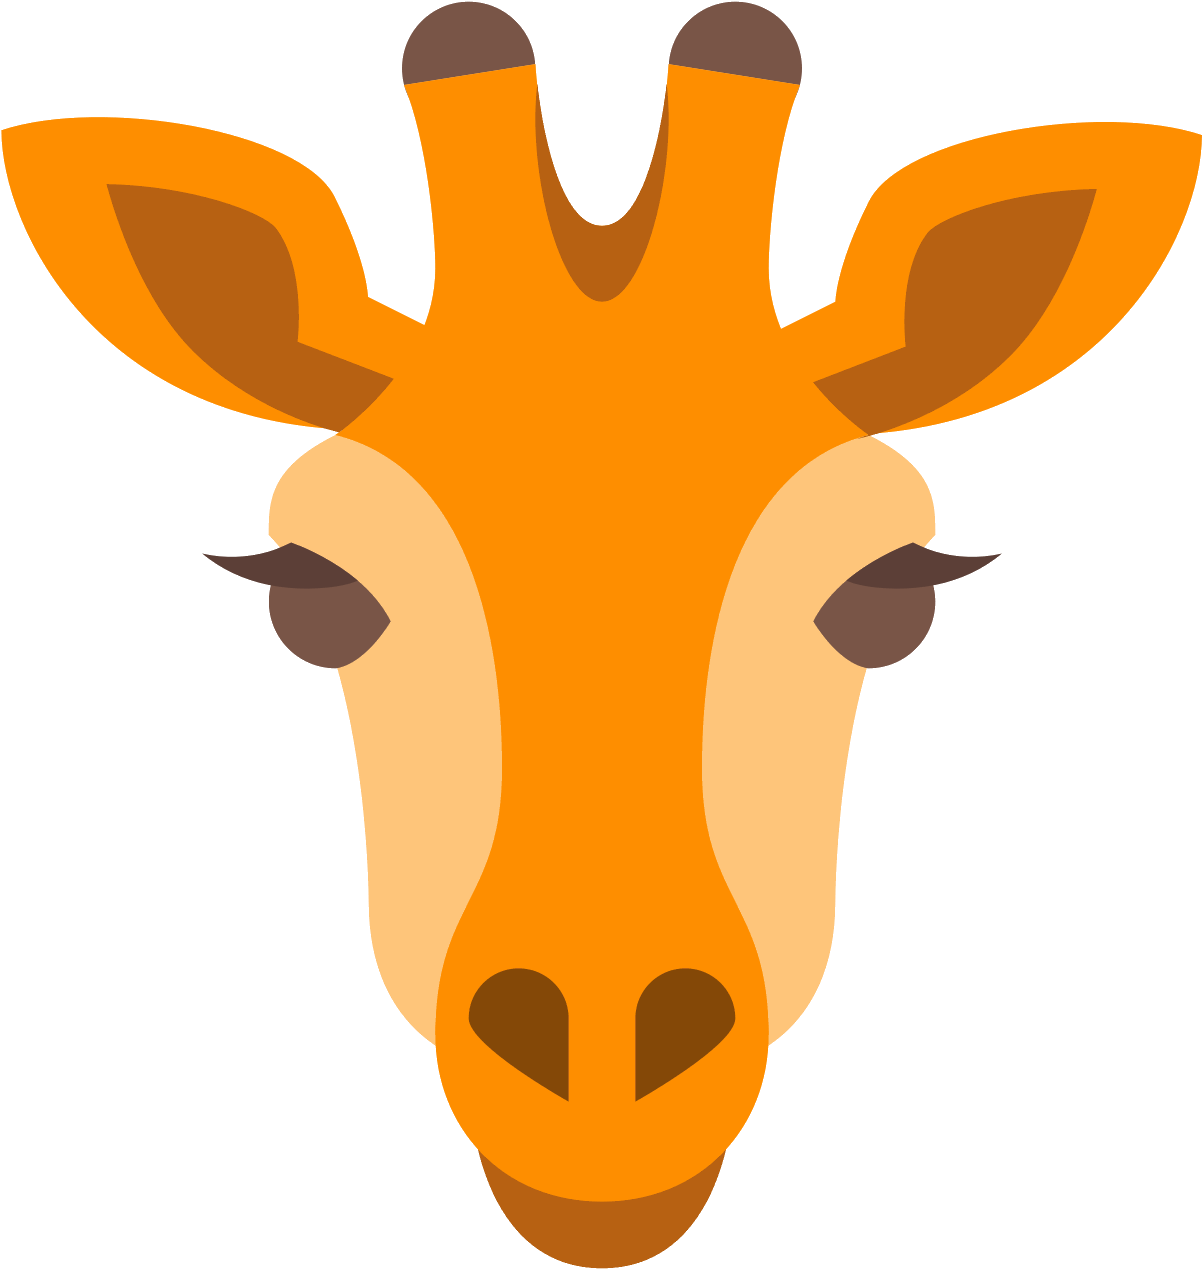 A Giraffe's Face On A Black Background